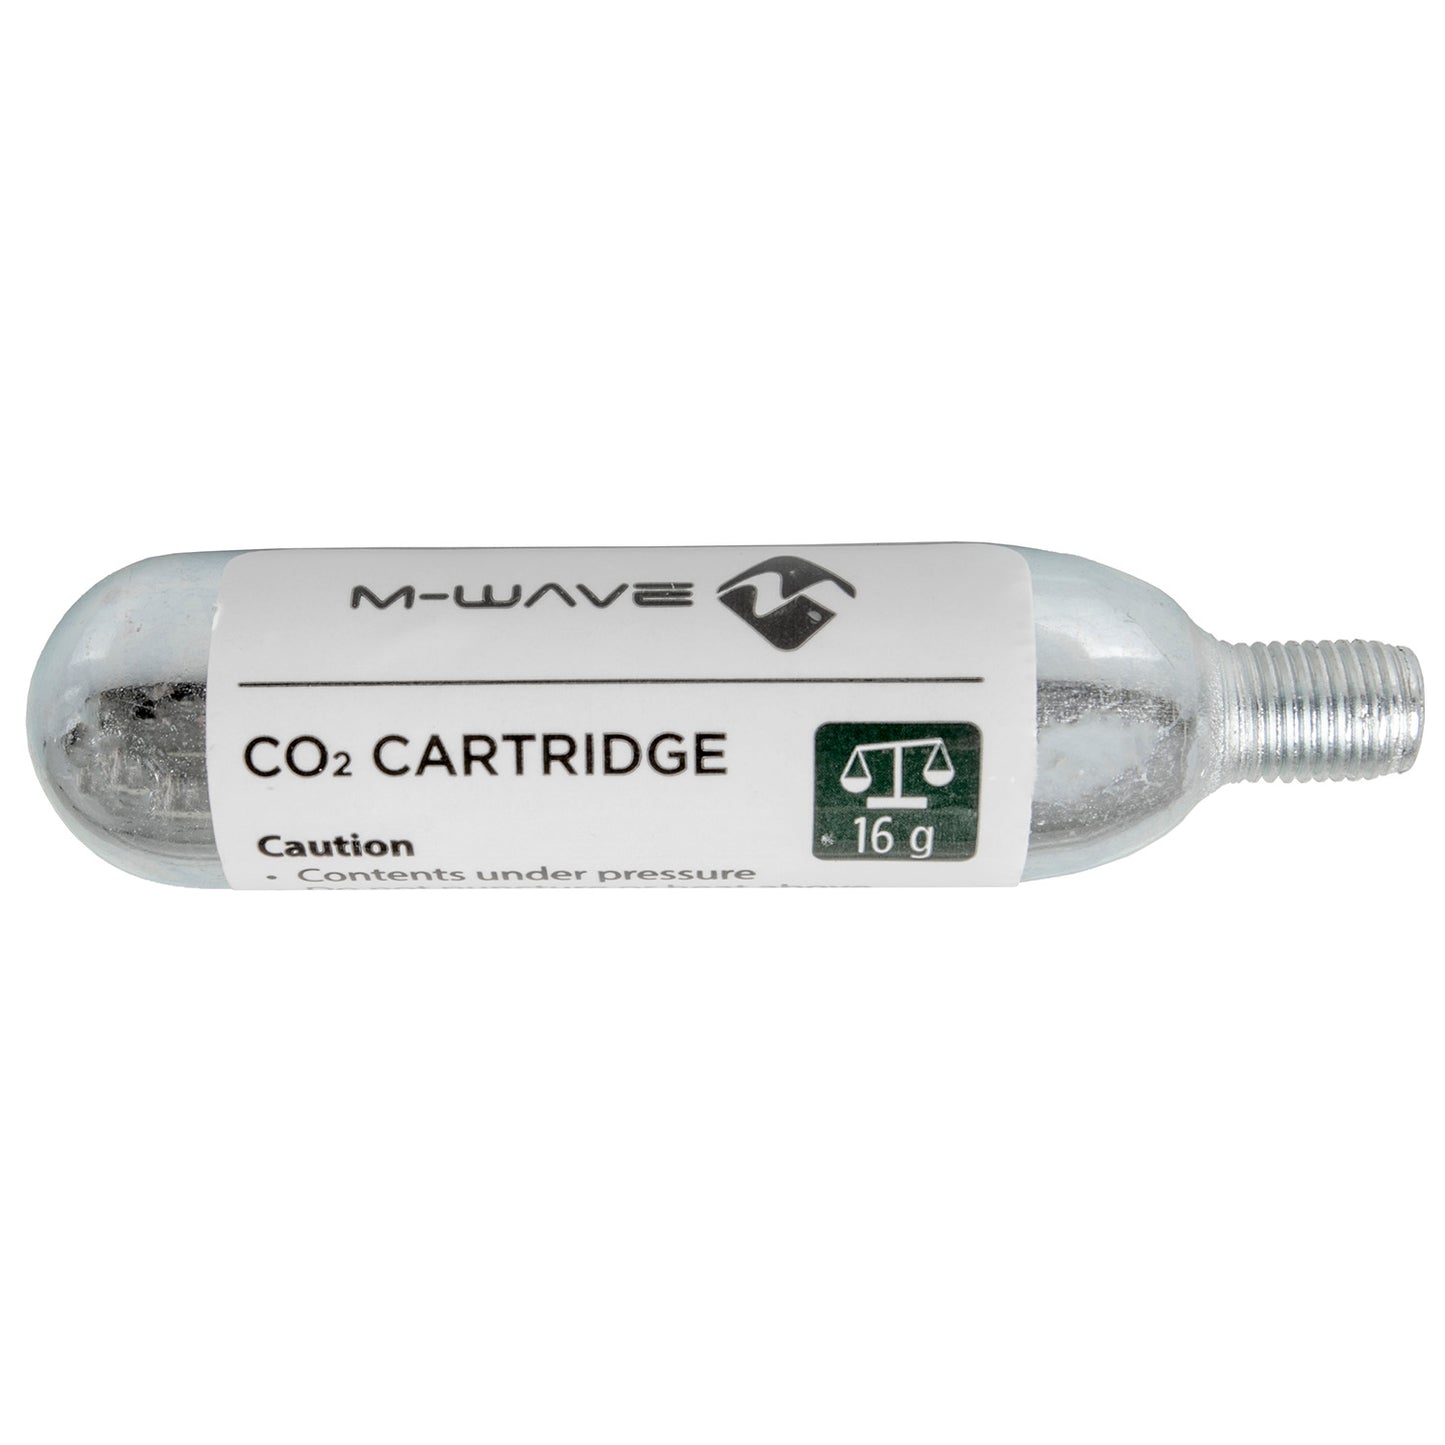 M-WAVE 16 CO2 cartridge